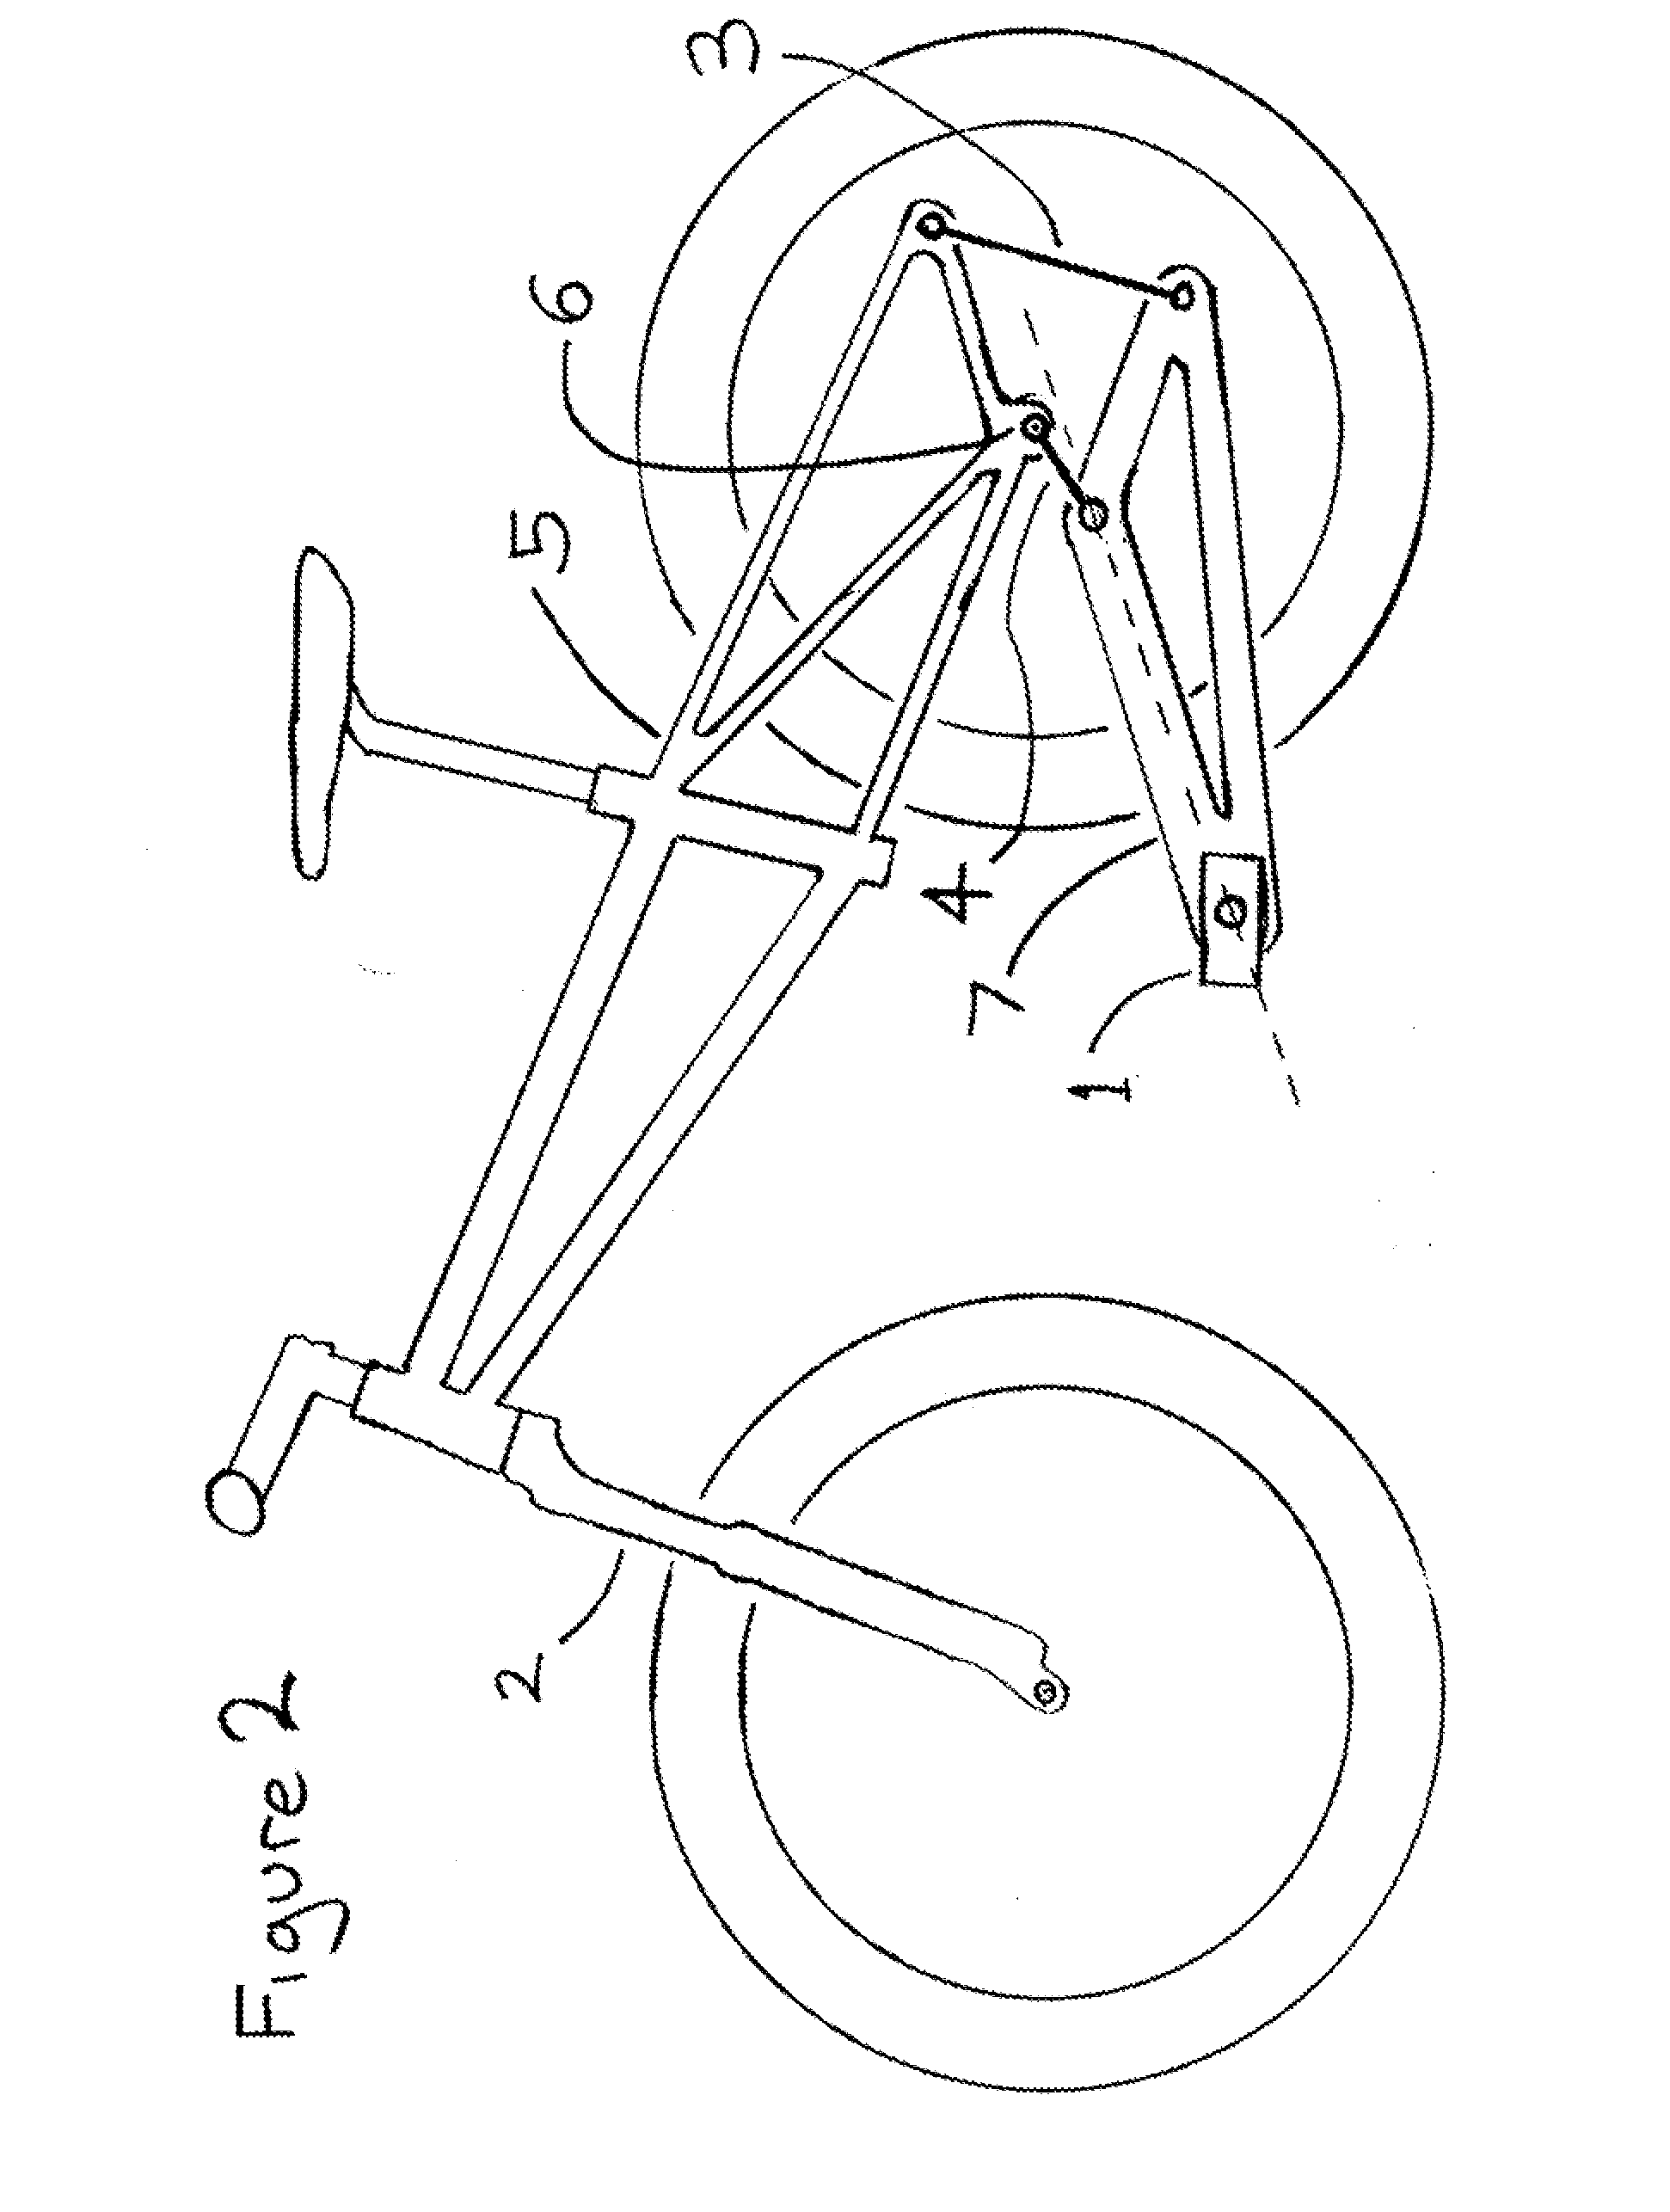 Bicycle transmission